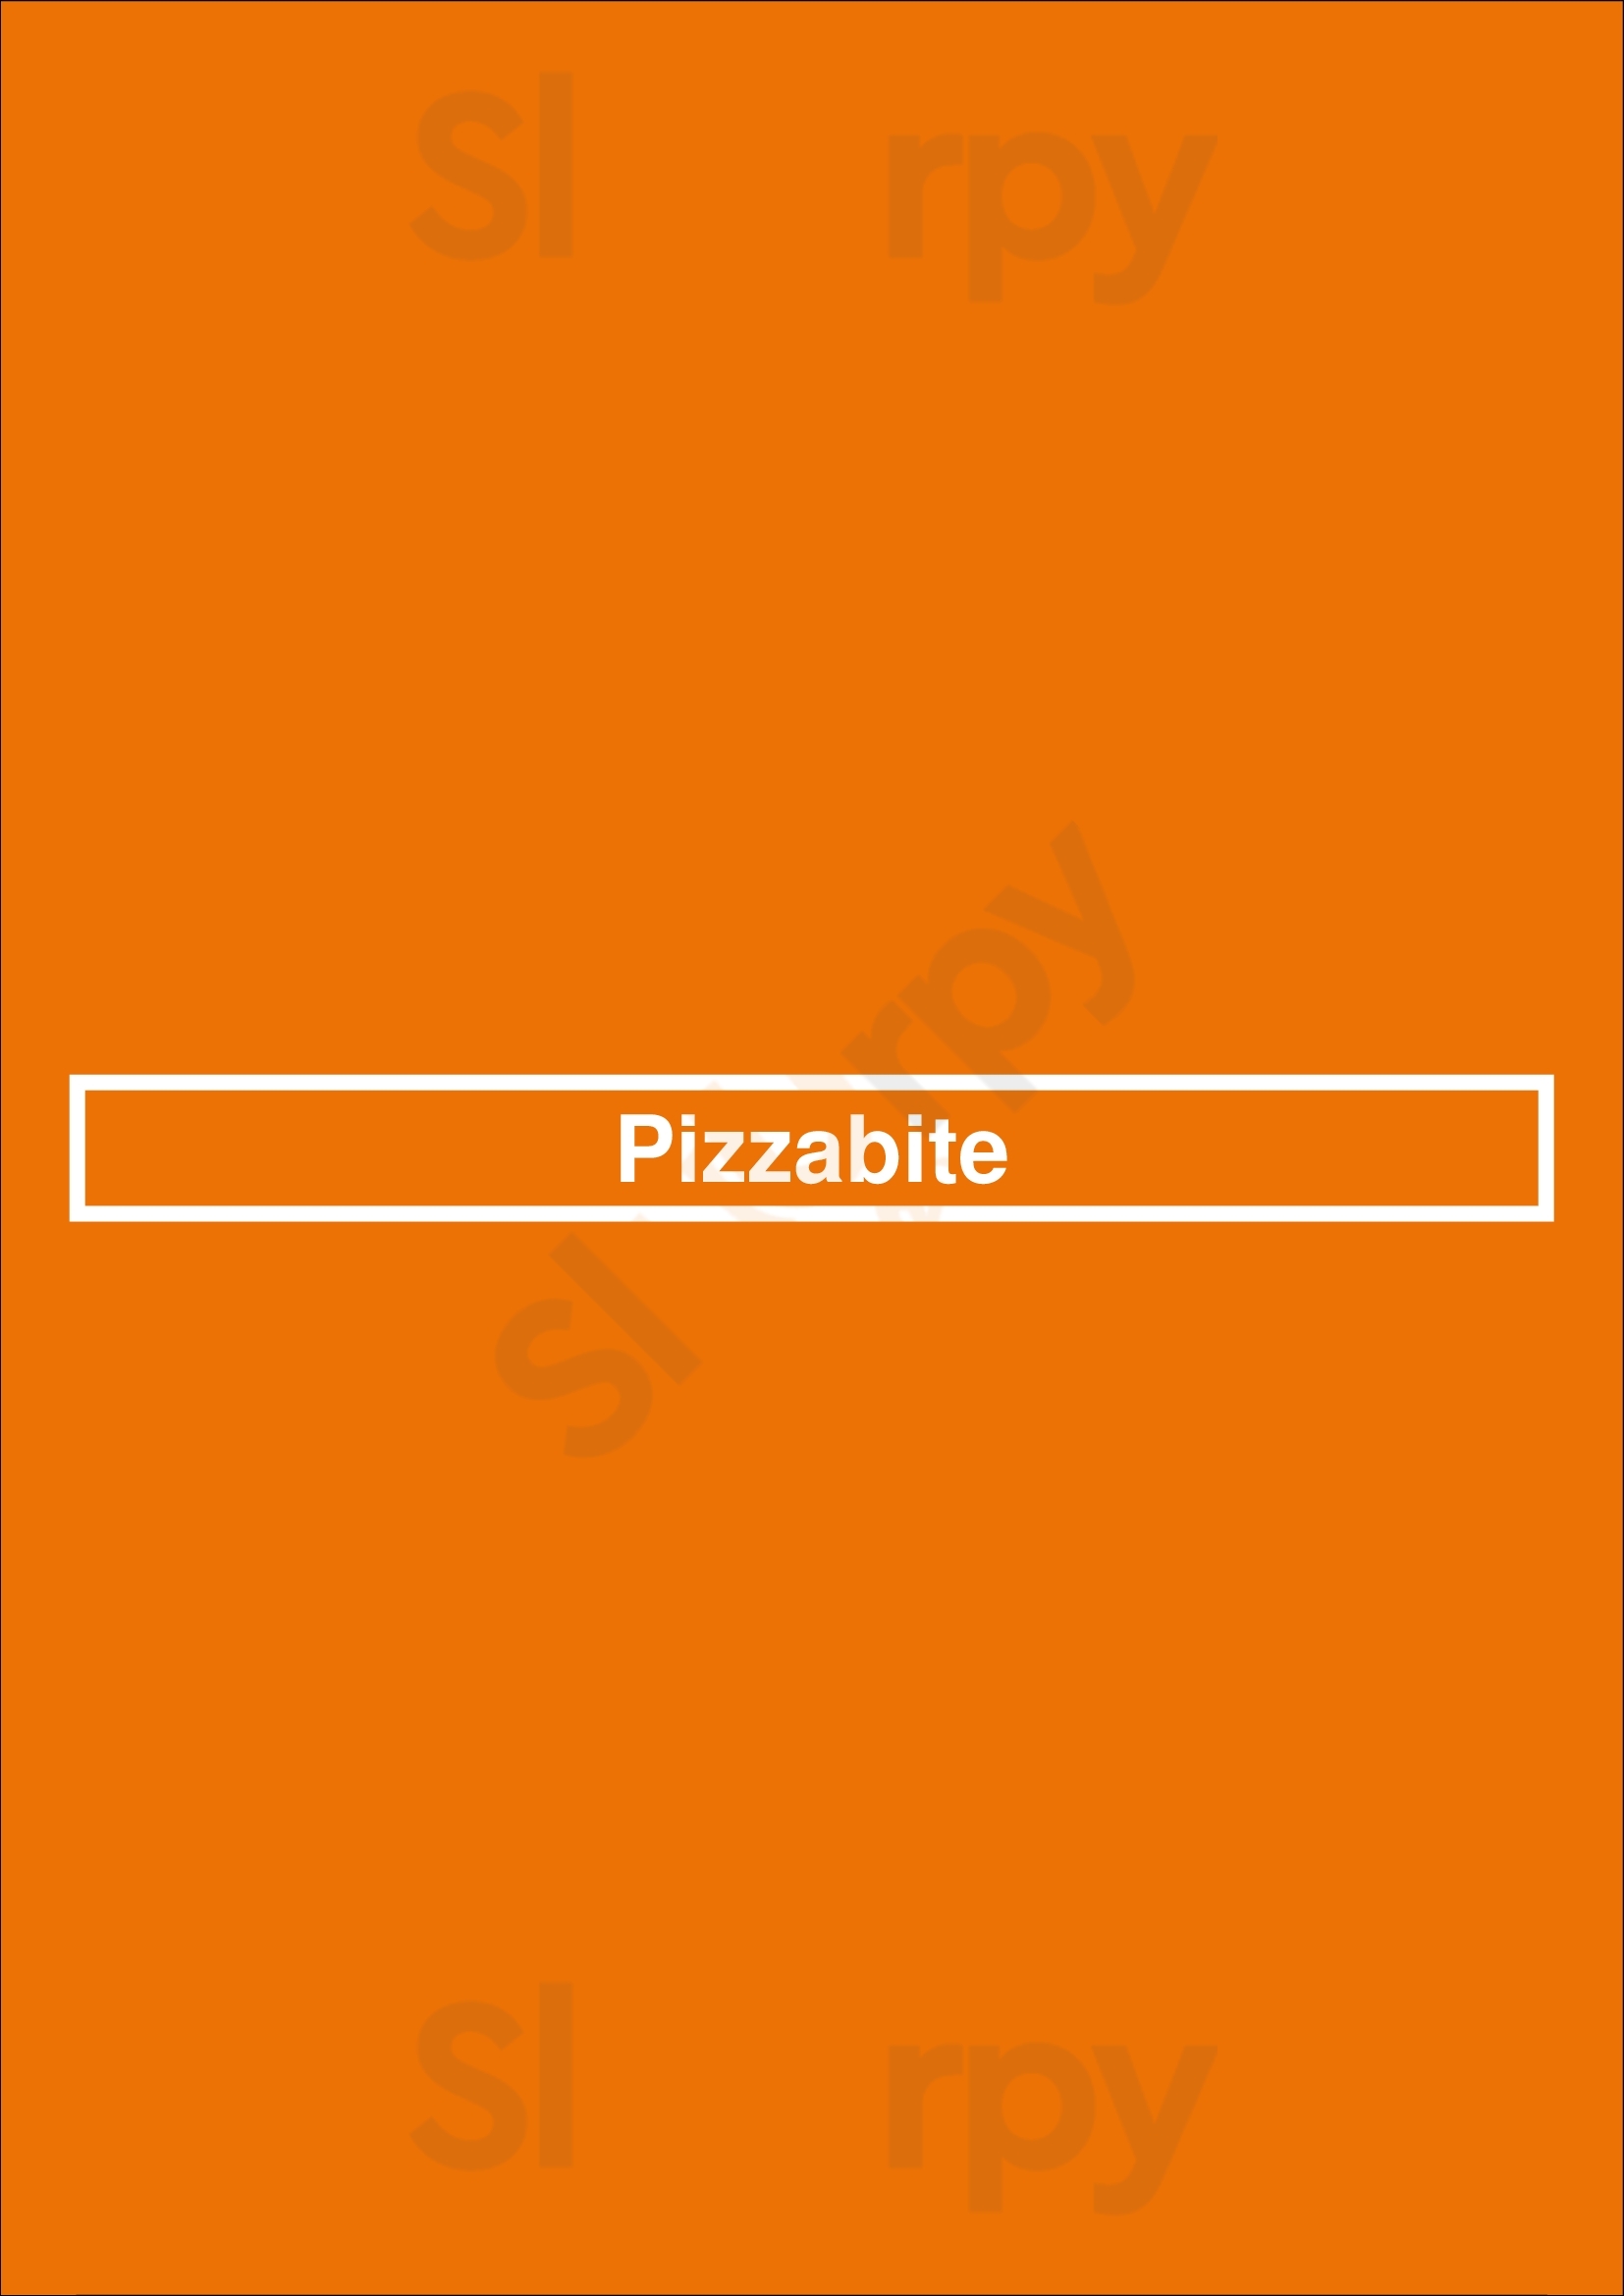 Pizzabite Saskatoon Menu - 1